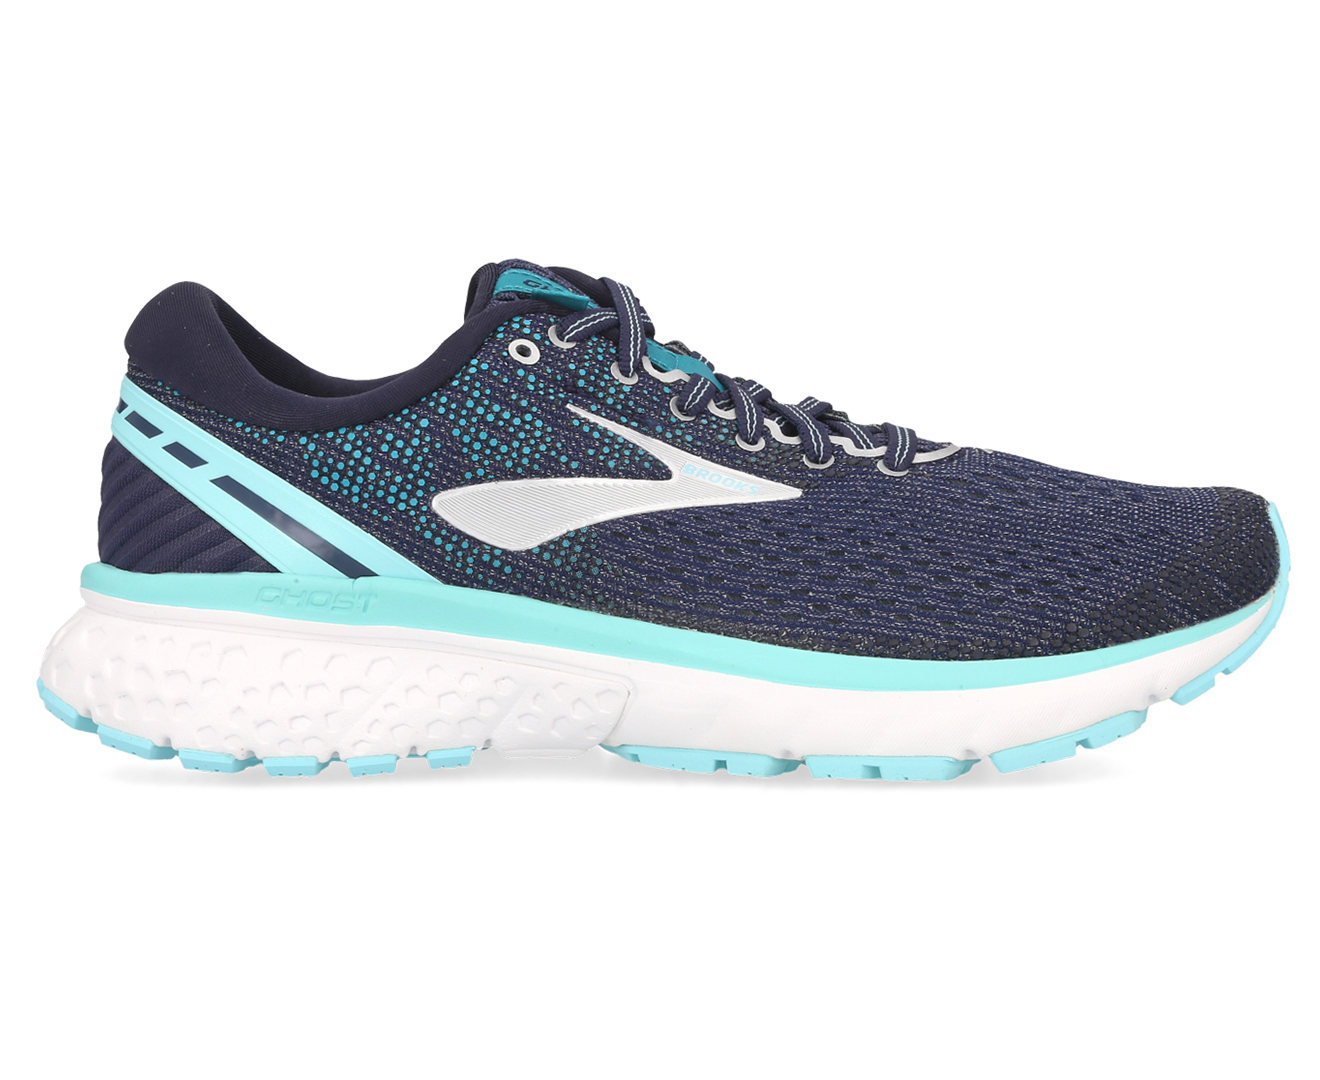 Brooks Women's Ghost 11 Running Shoes - Navy/Grey/Blue | Www.catch.com ...